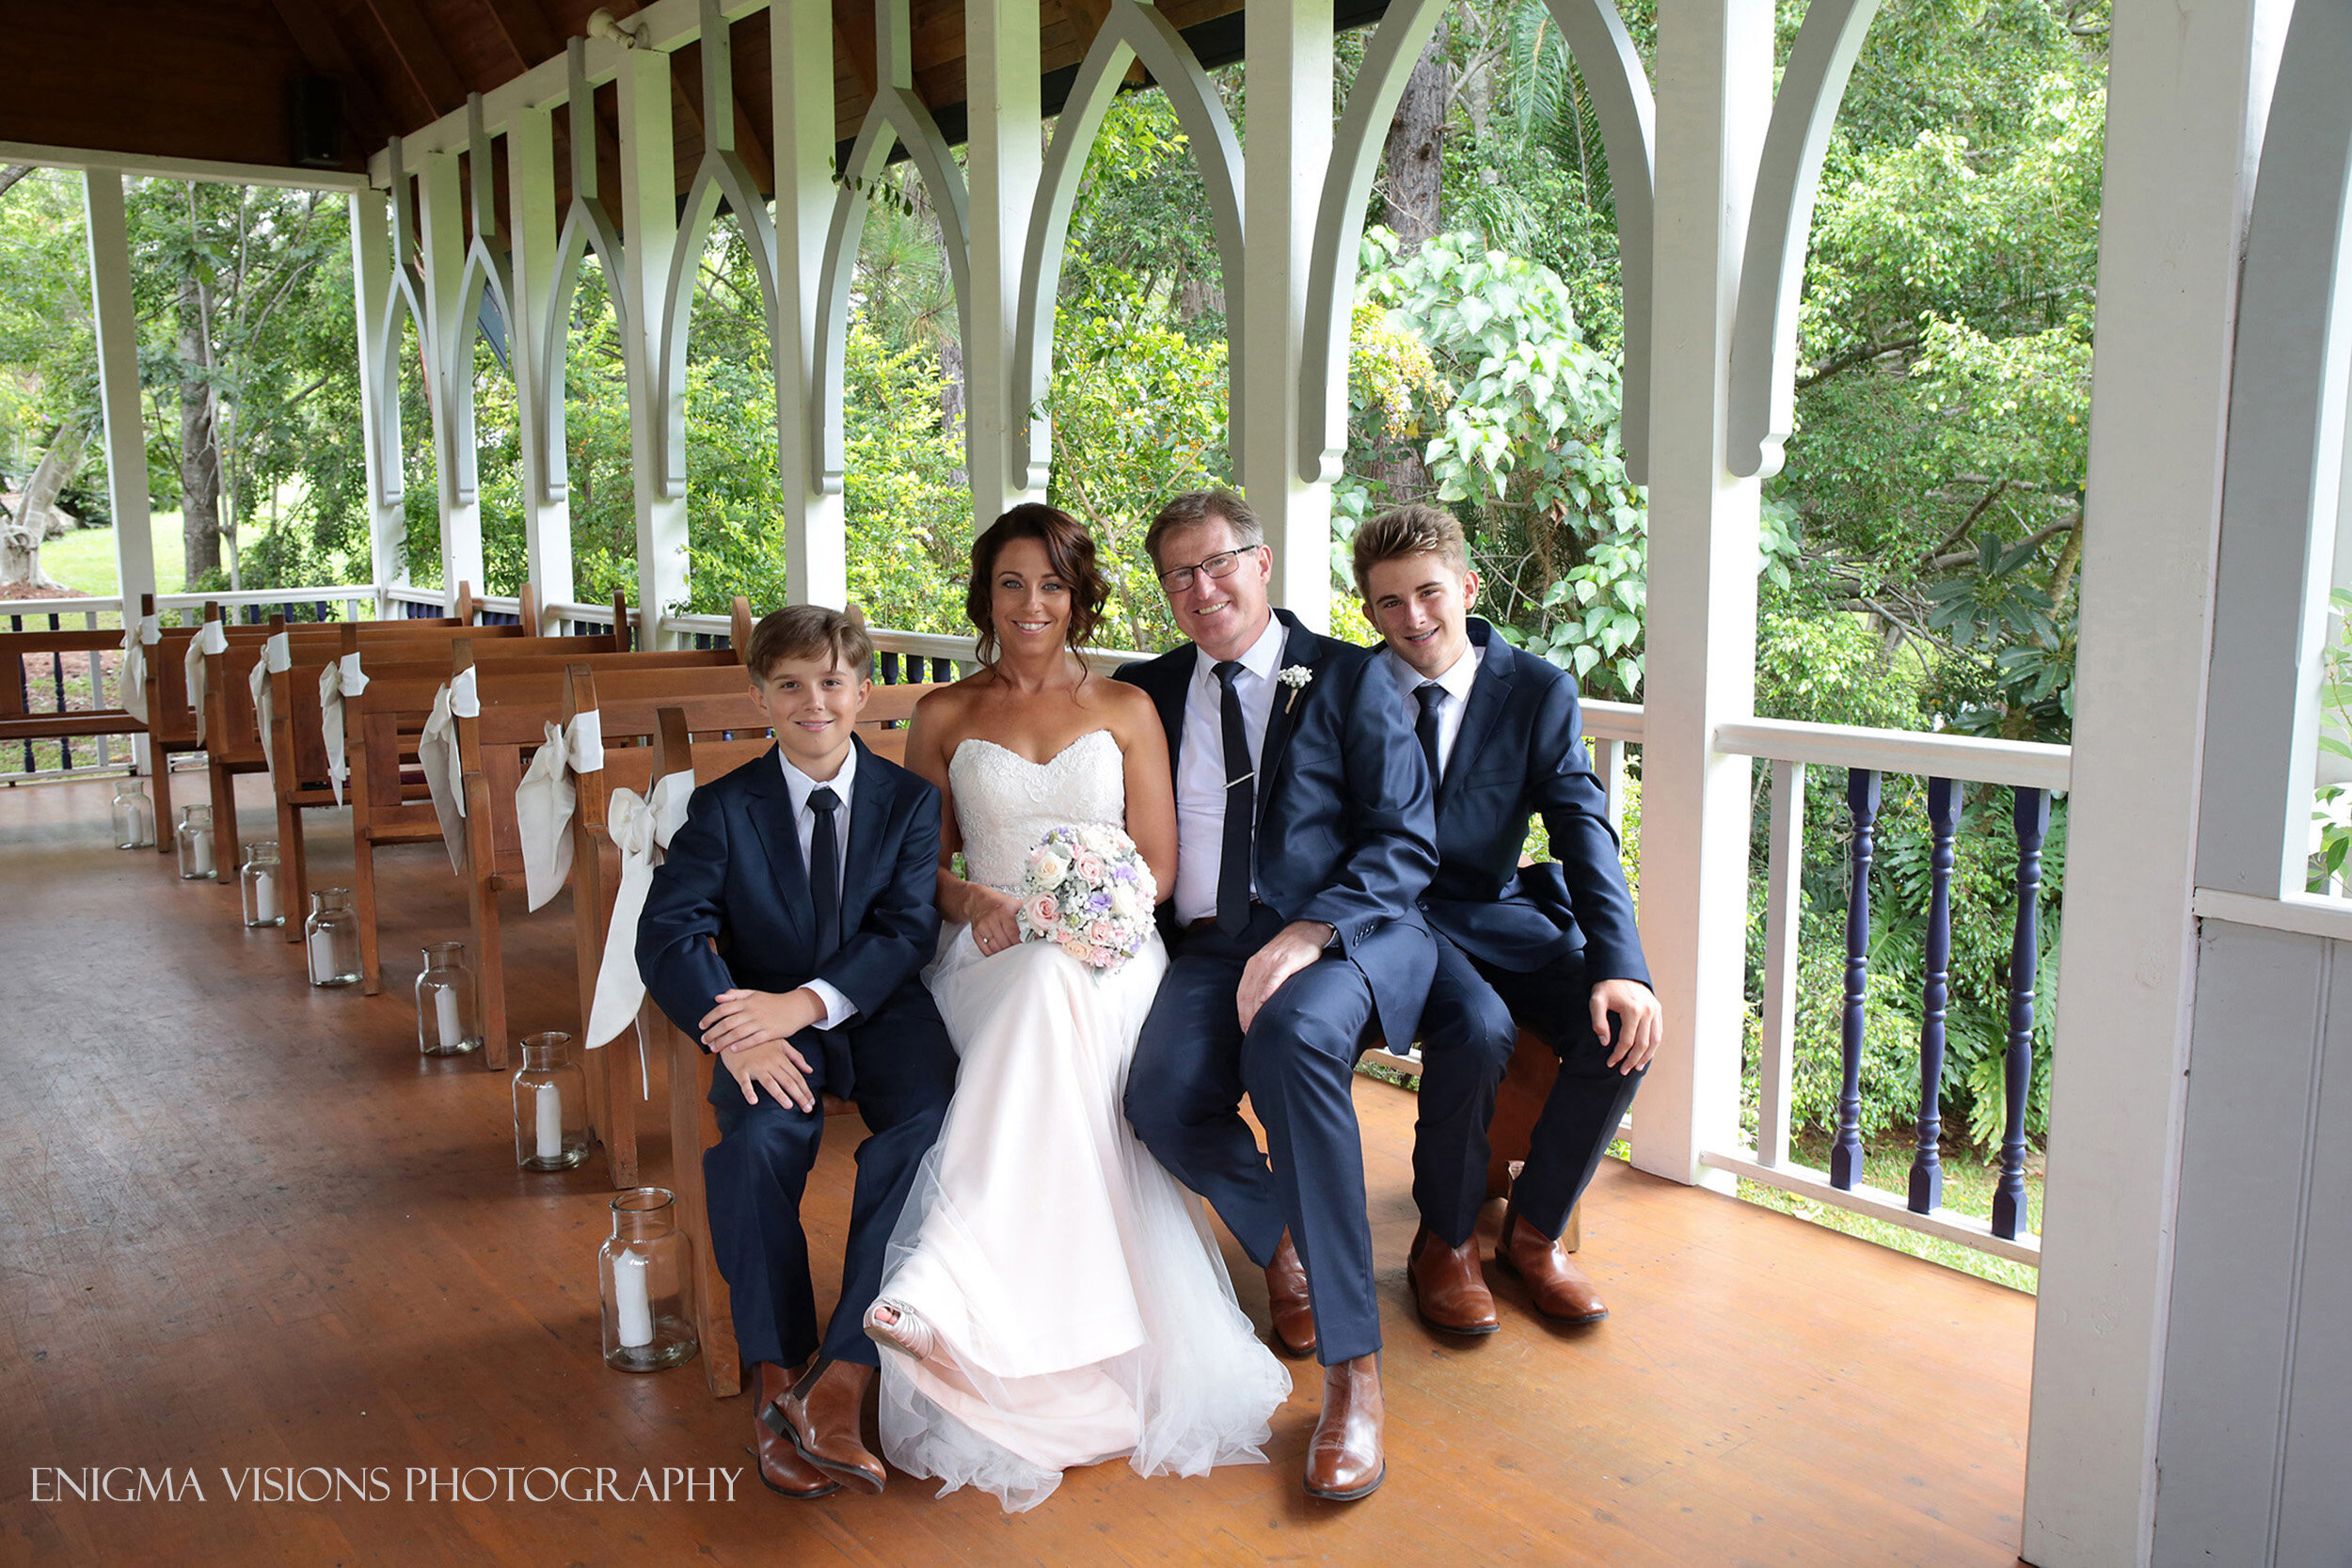 enigma_visions_photography_wedding-Belinda+Howard (34).jpg